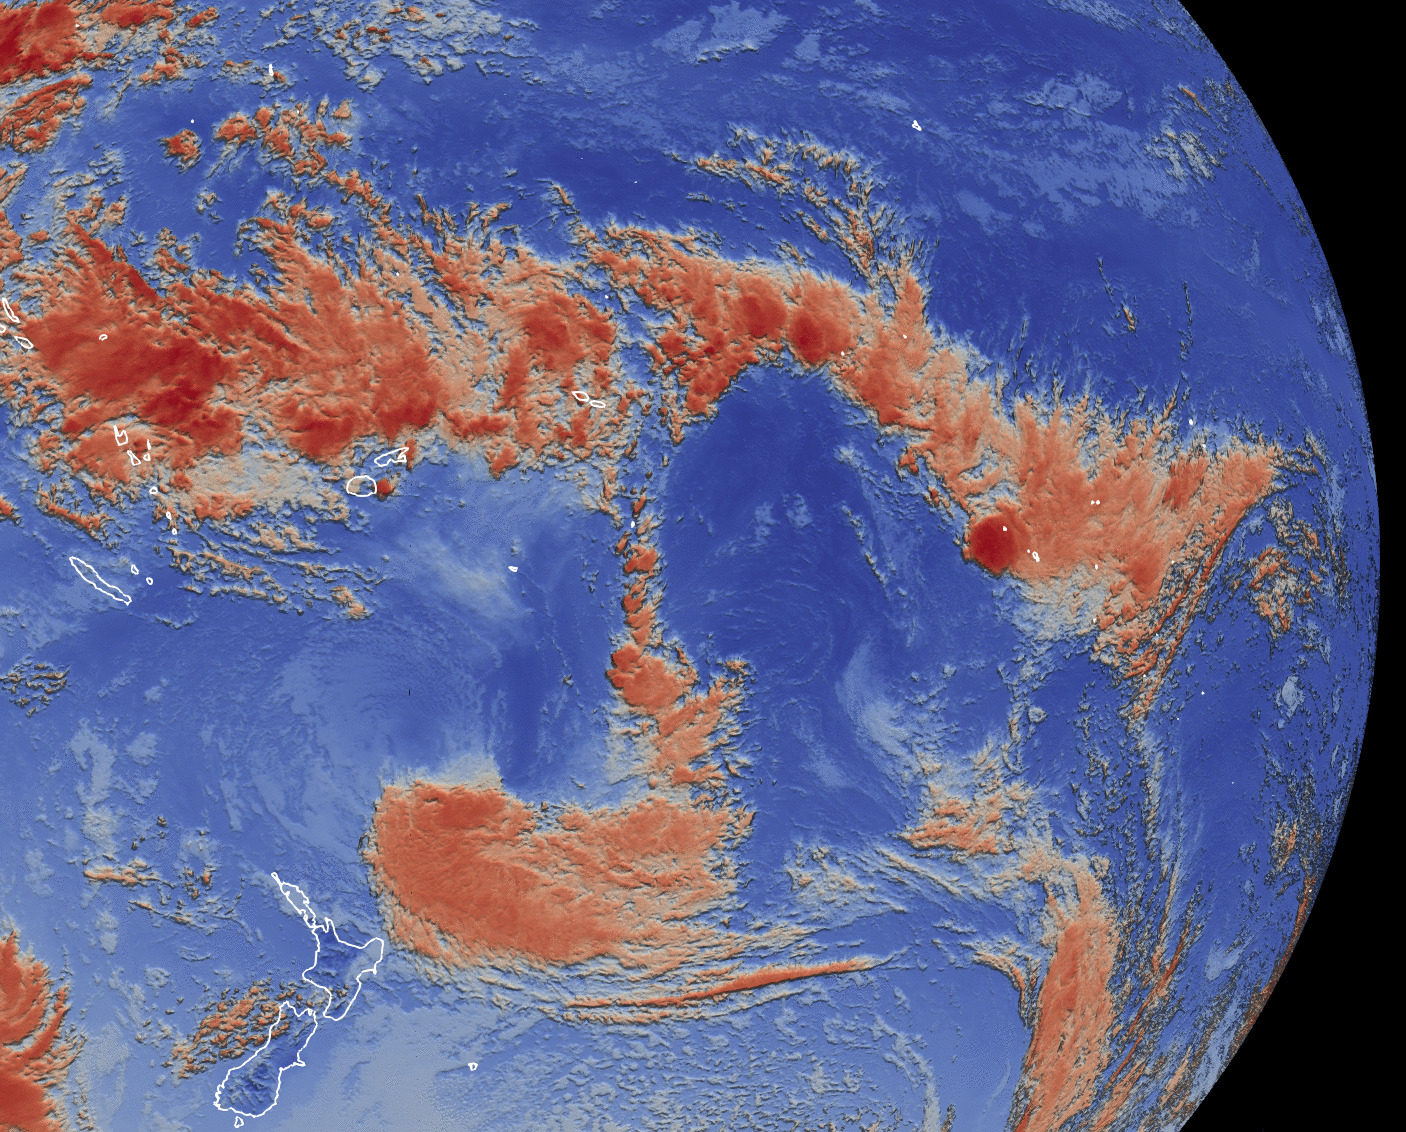 Tonga Eruption As Seen In Infrared Satellite Data 